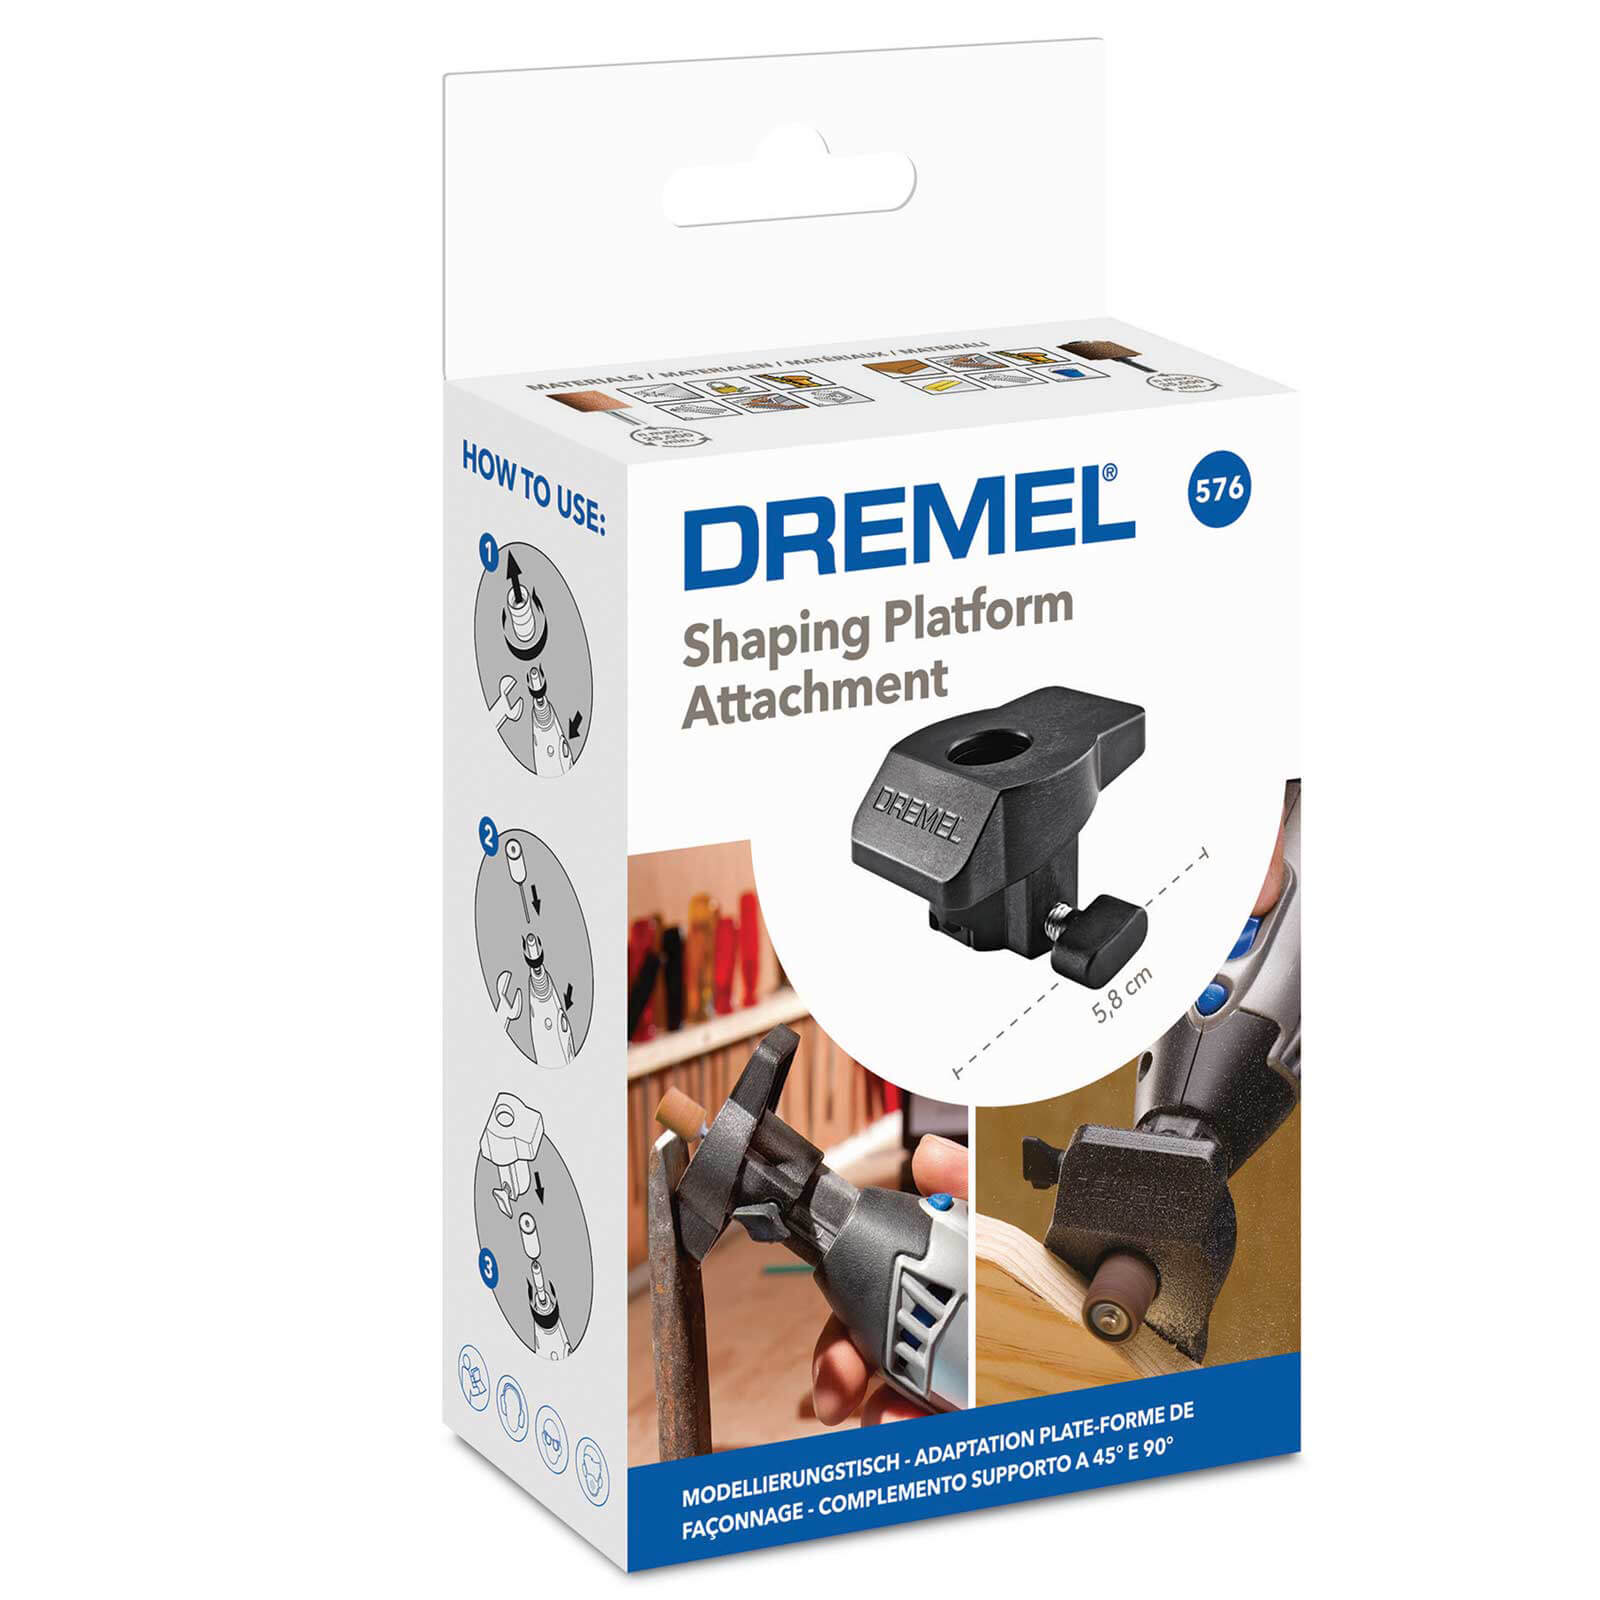 Dremel 576 Rotary Multi Tool Shaping Platform Attachment Kit